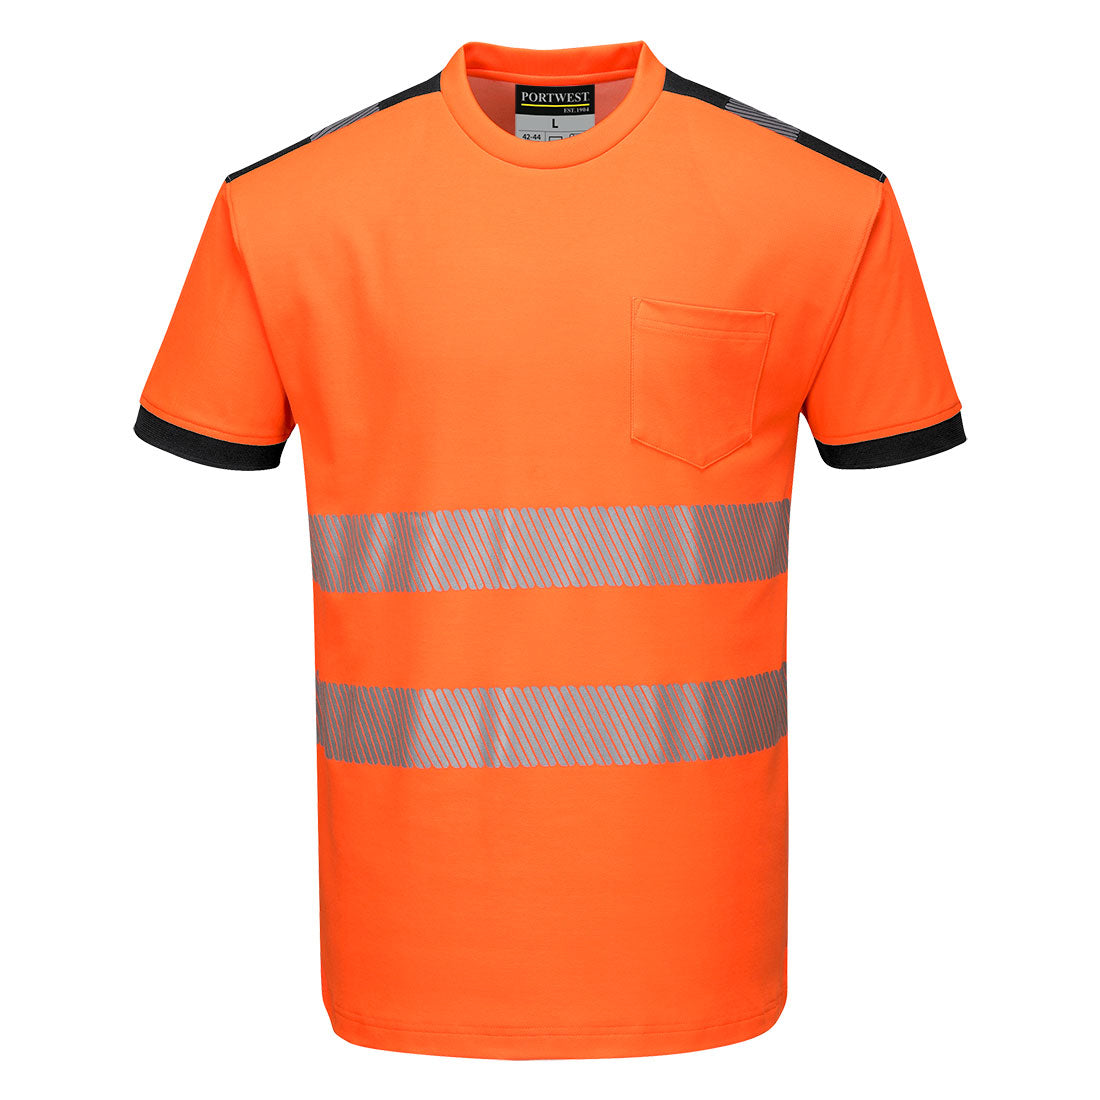 Portwest T181 - Orange/Black Sz M PW3 Hi-Vis Short Sleeved T-Shirt Viz Visibilty